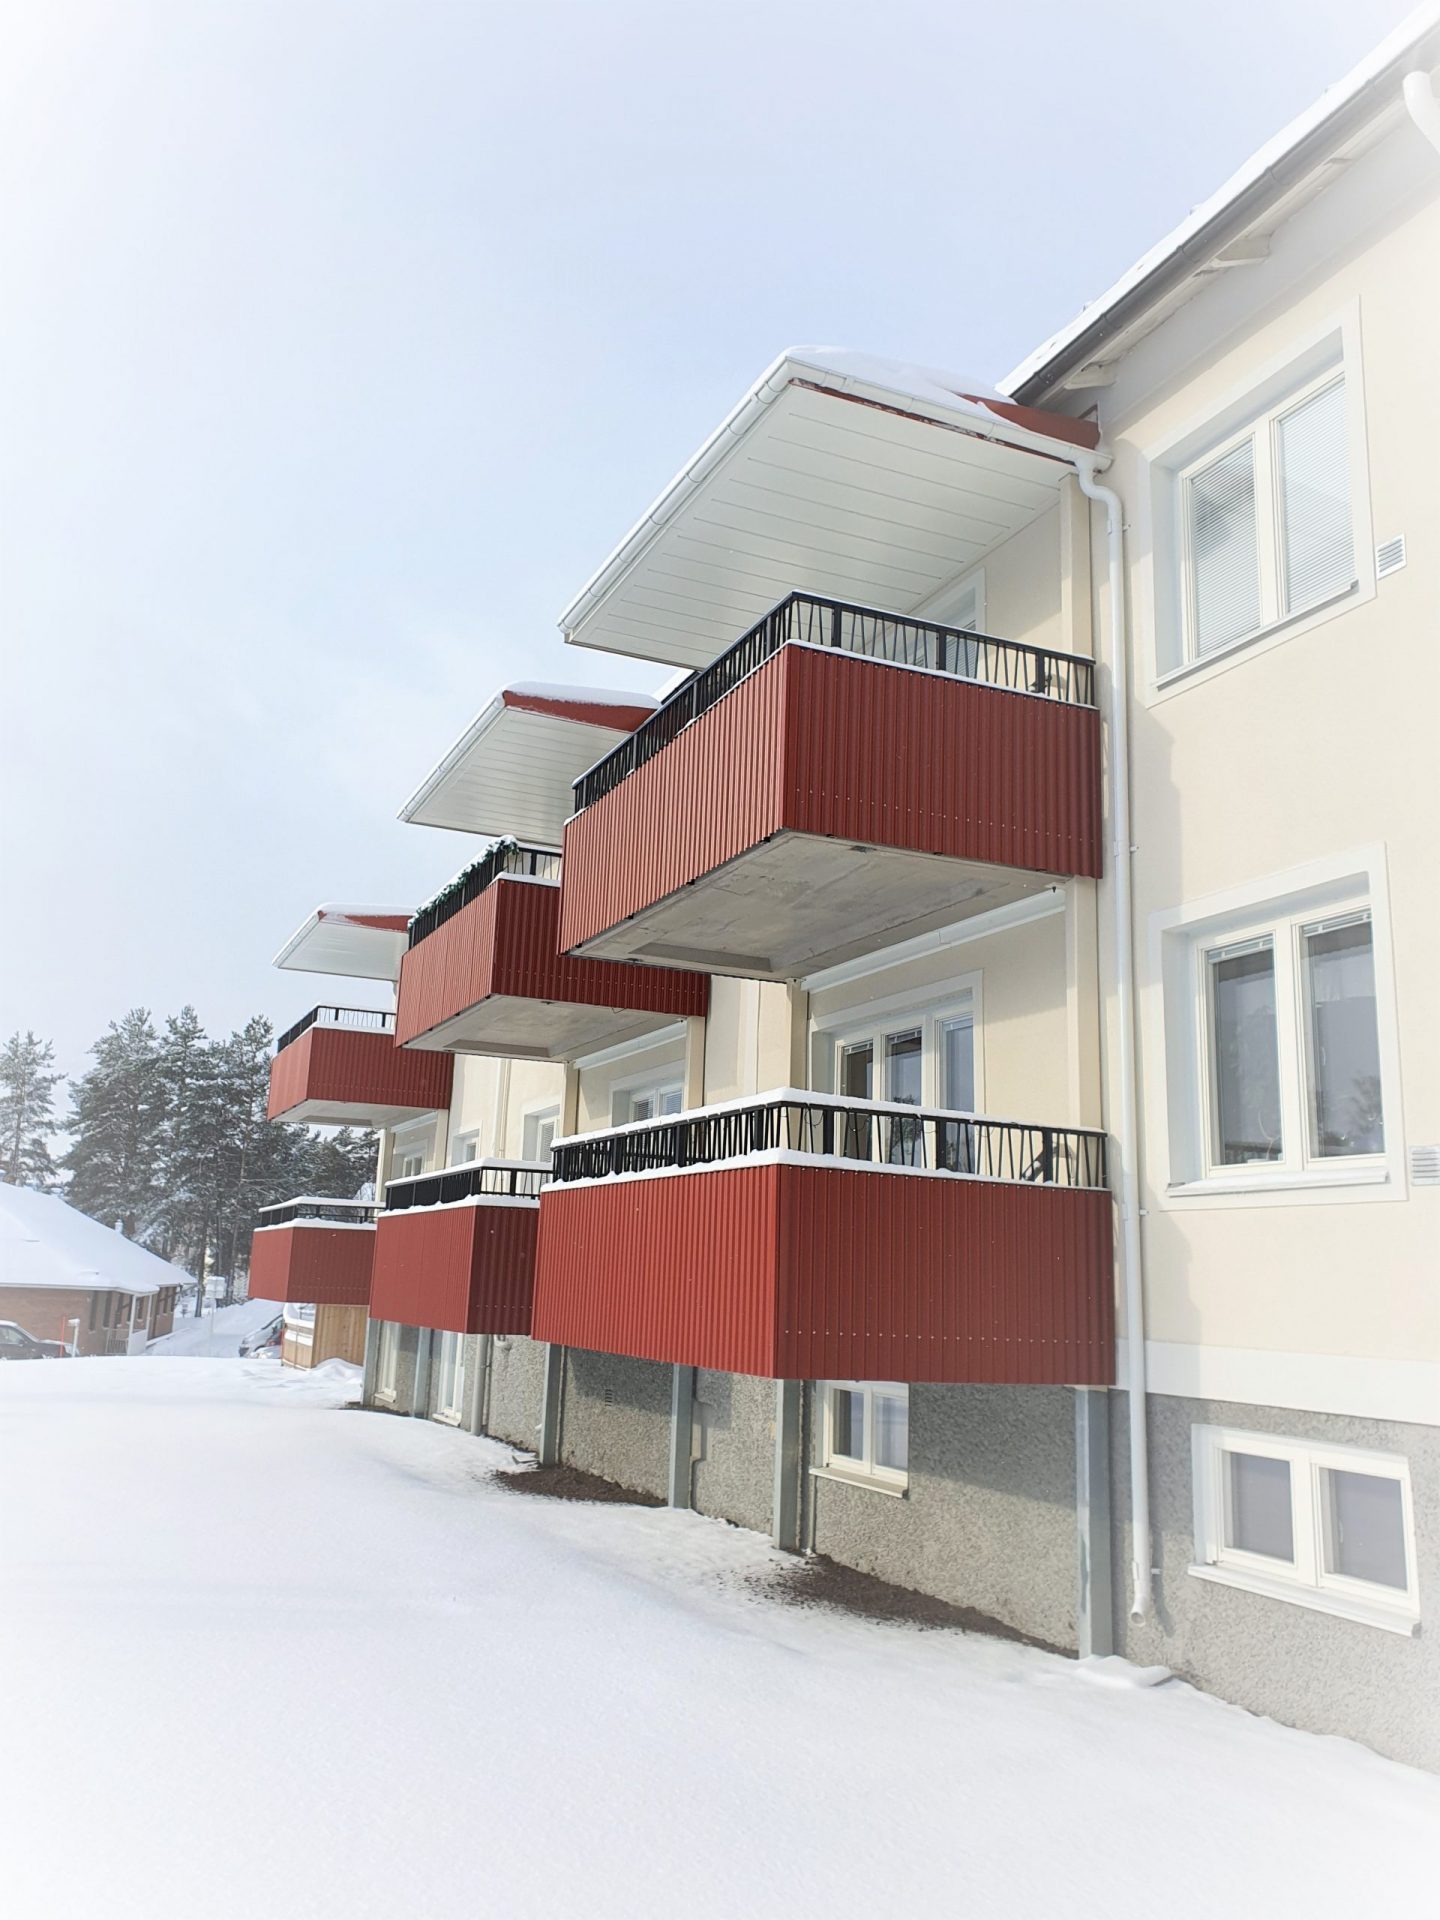 Hus i Timrå med röda balkonger